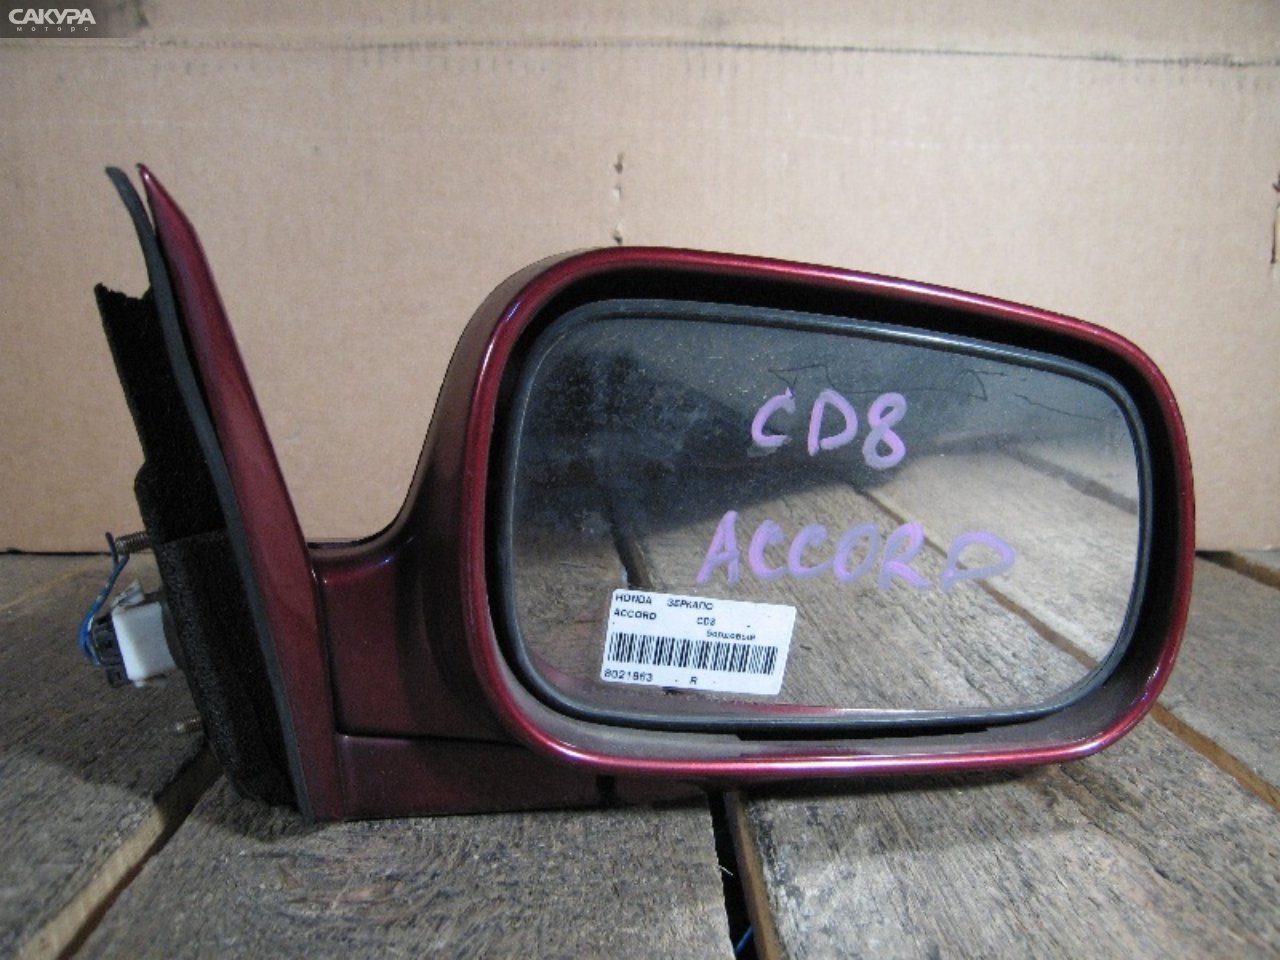 Зеркало боковое правое Honda Accord Coupe US CD8: купить в Сакура Абакан.